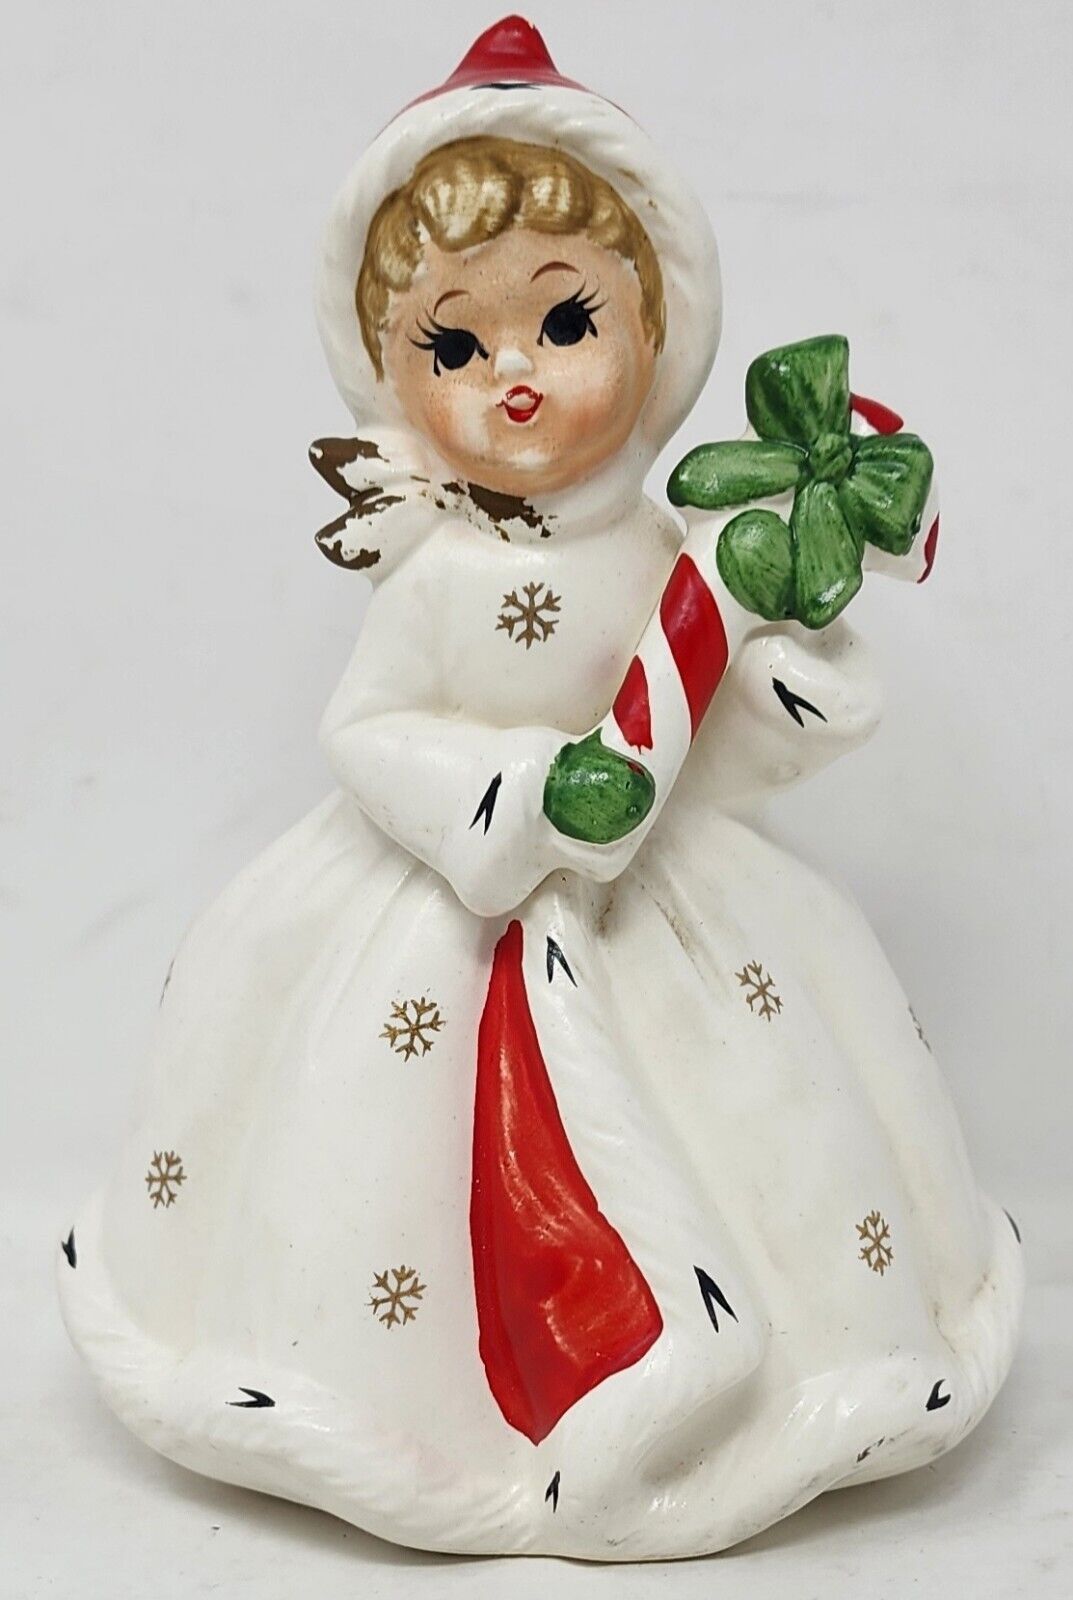 VTG Napco ware #8389 Christmas Planter Shopper Girl Candy Cane Japan 50s Figure